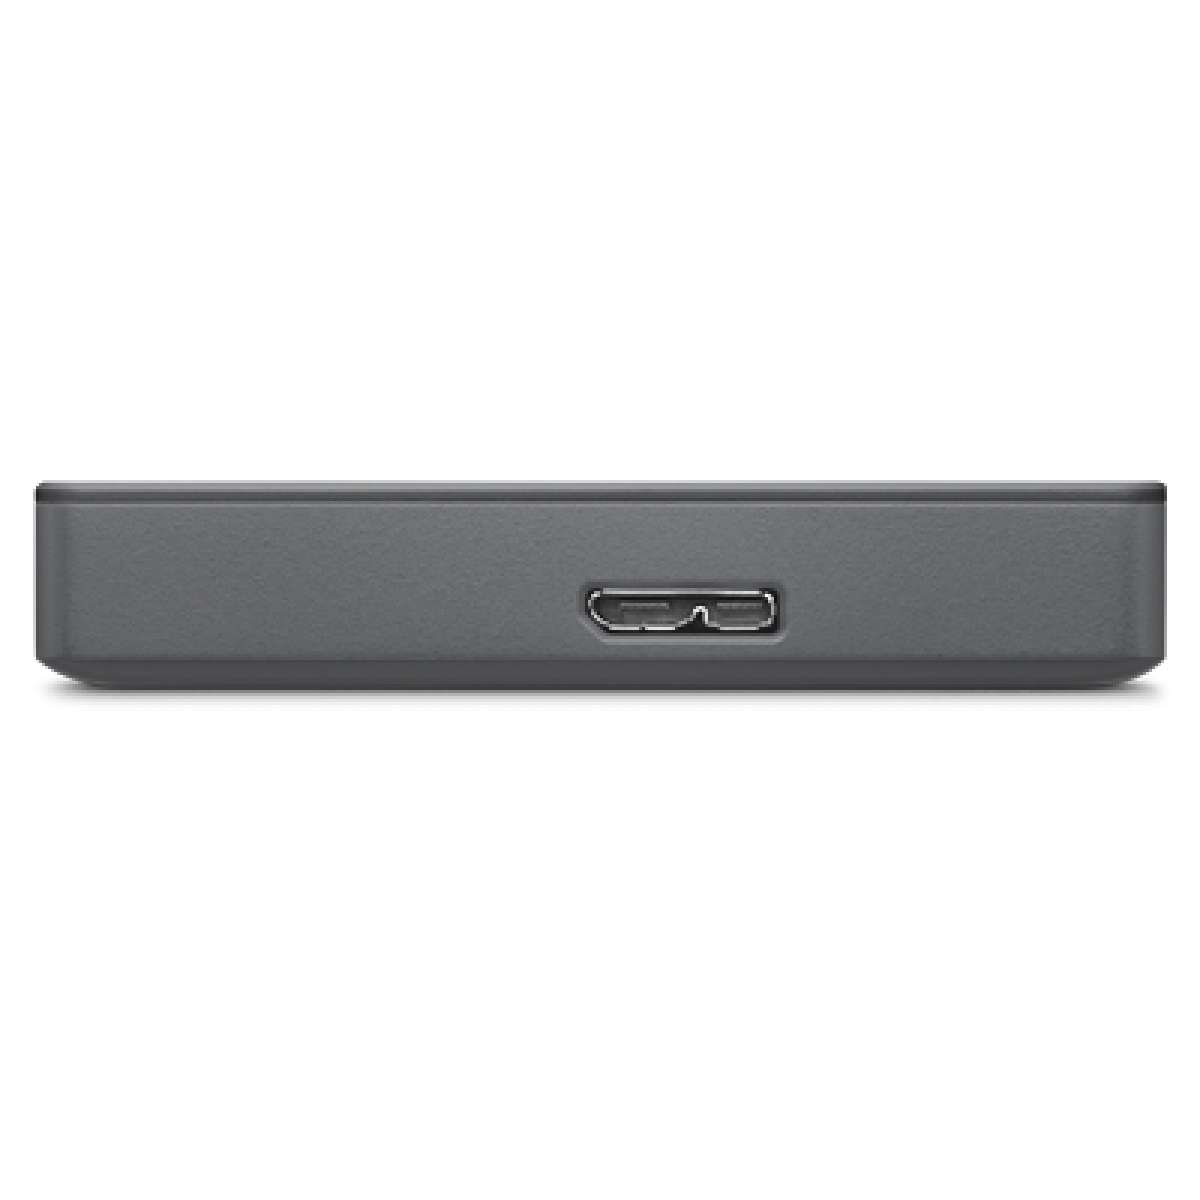 HD Externo Seagate Basic, 1TB, USB 3.0, Black, STJL1000400